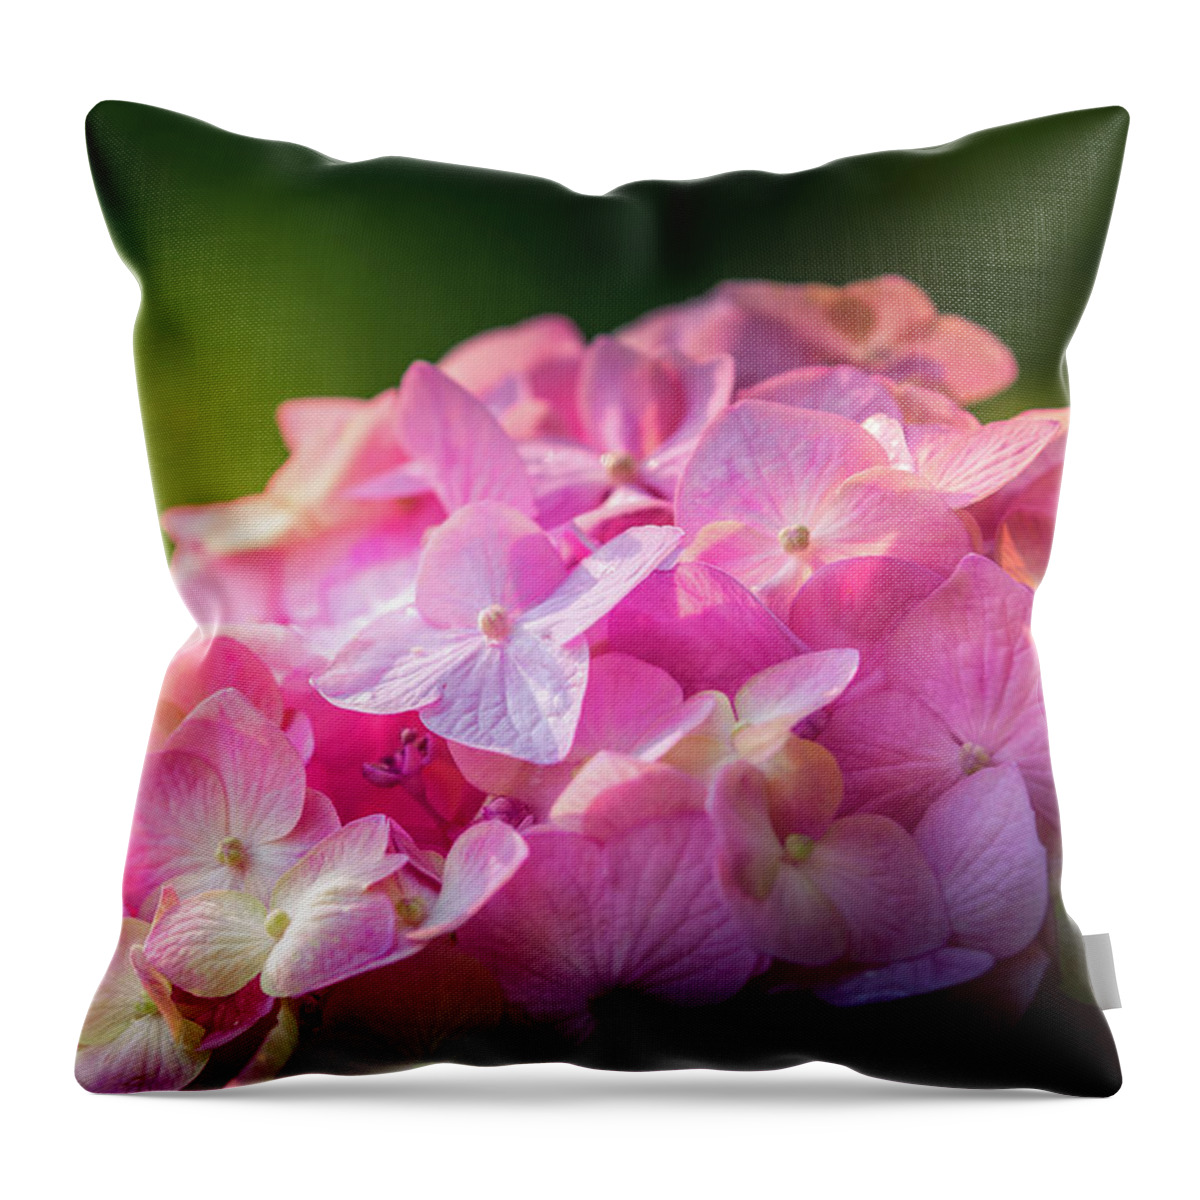 Flower Throw Pillow featuring the photograph Hydrangea by Allin Sorenson